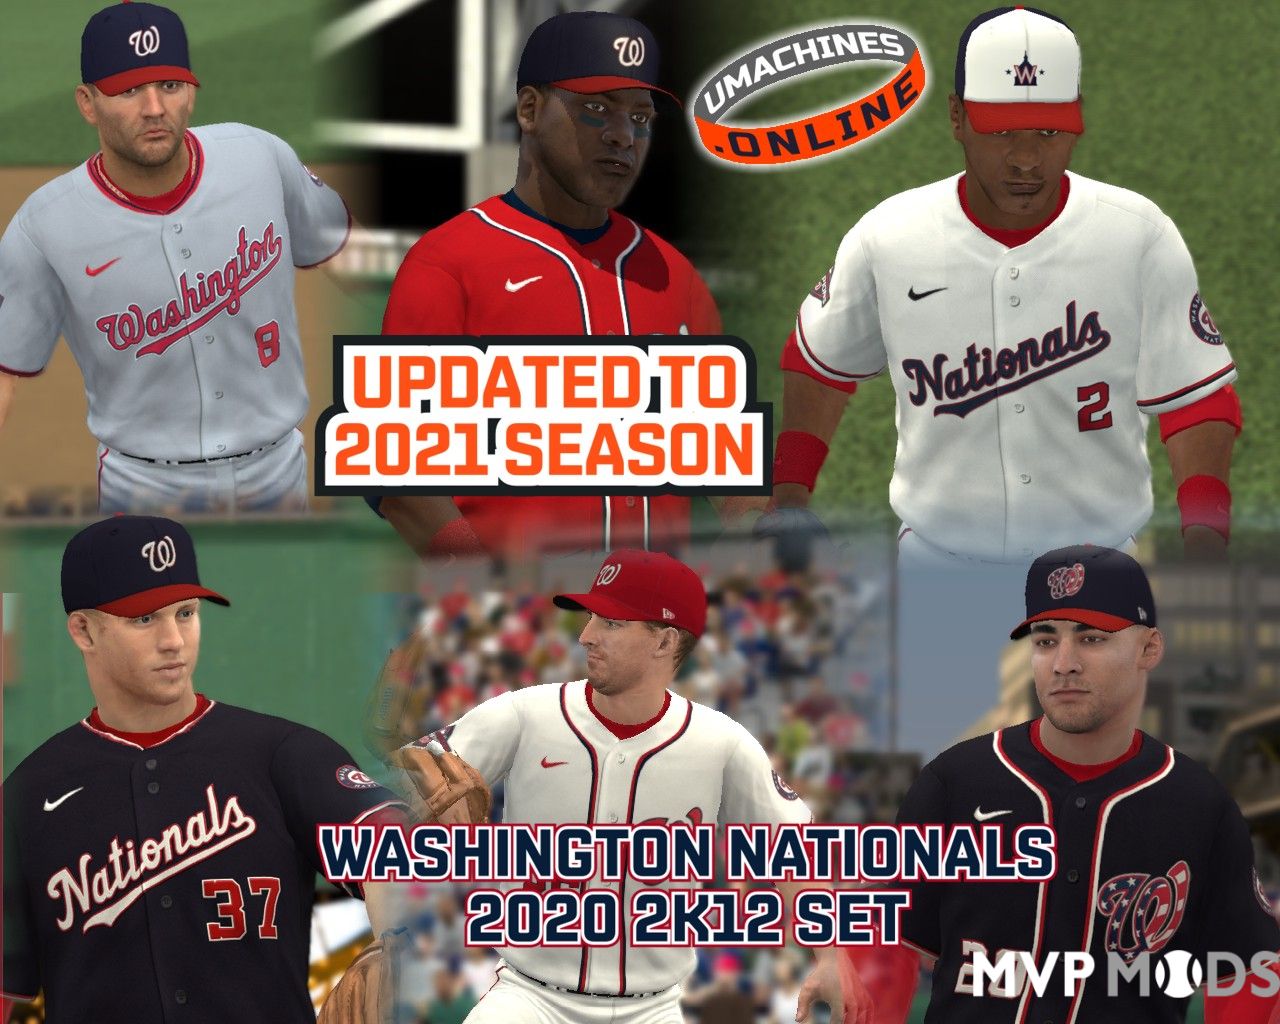 2020/2021 Washington Nationals Uniform Set - Uniforms - MVP Mods